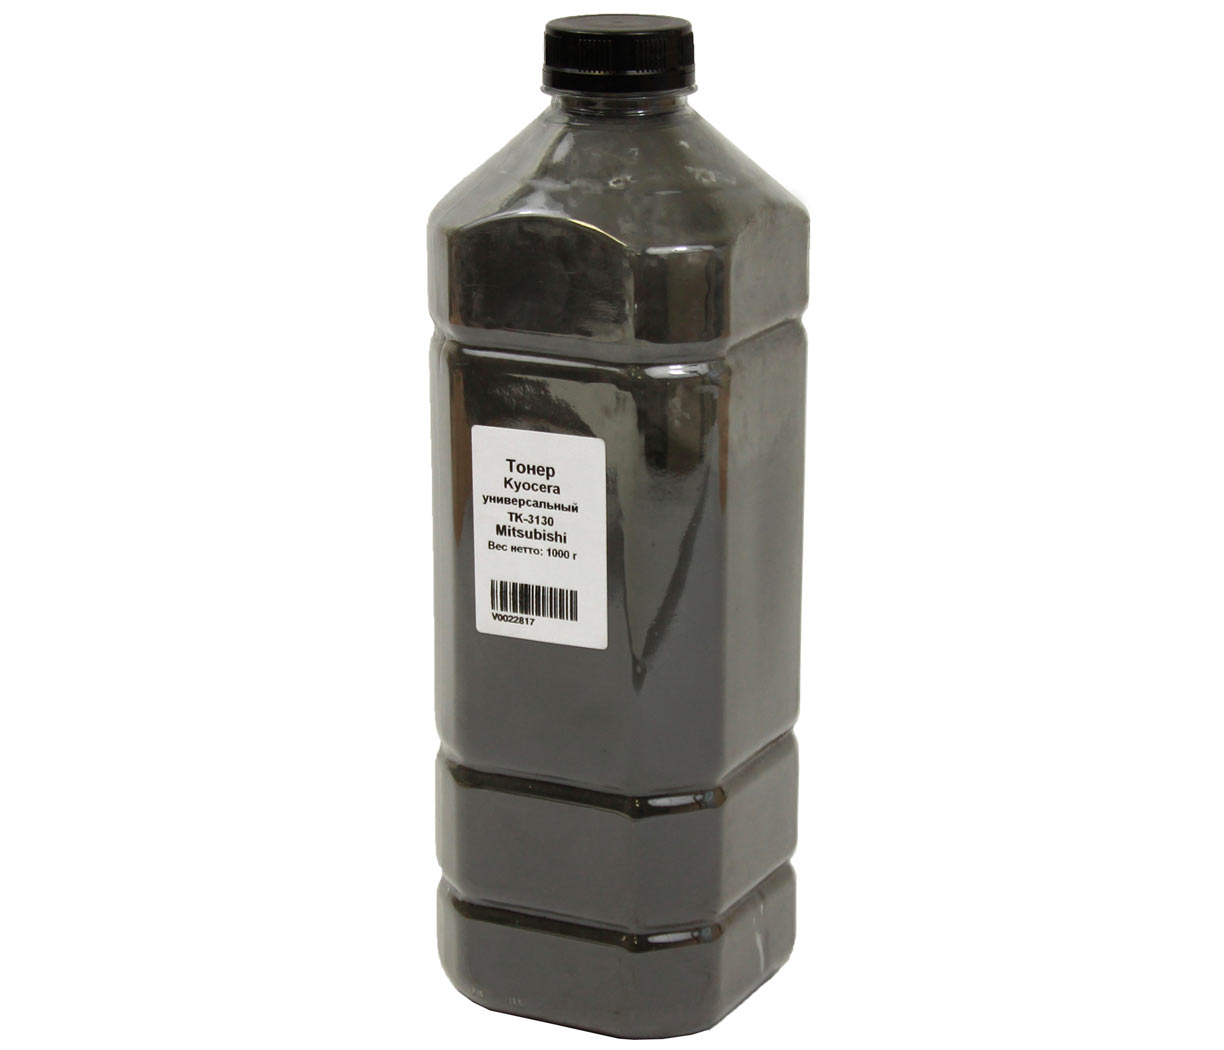 Тонер Delacamp UT19F5A, бутыль 1 кг, черный, совместимый для Kyocera FS-4200dn/4300dn/4100dn/2100/2100dn/6970d/6950/6950dbn, универсальный (V0022817)